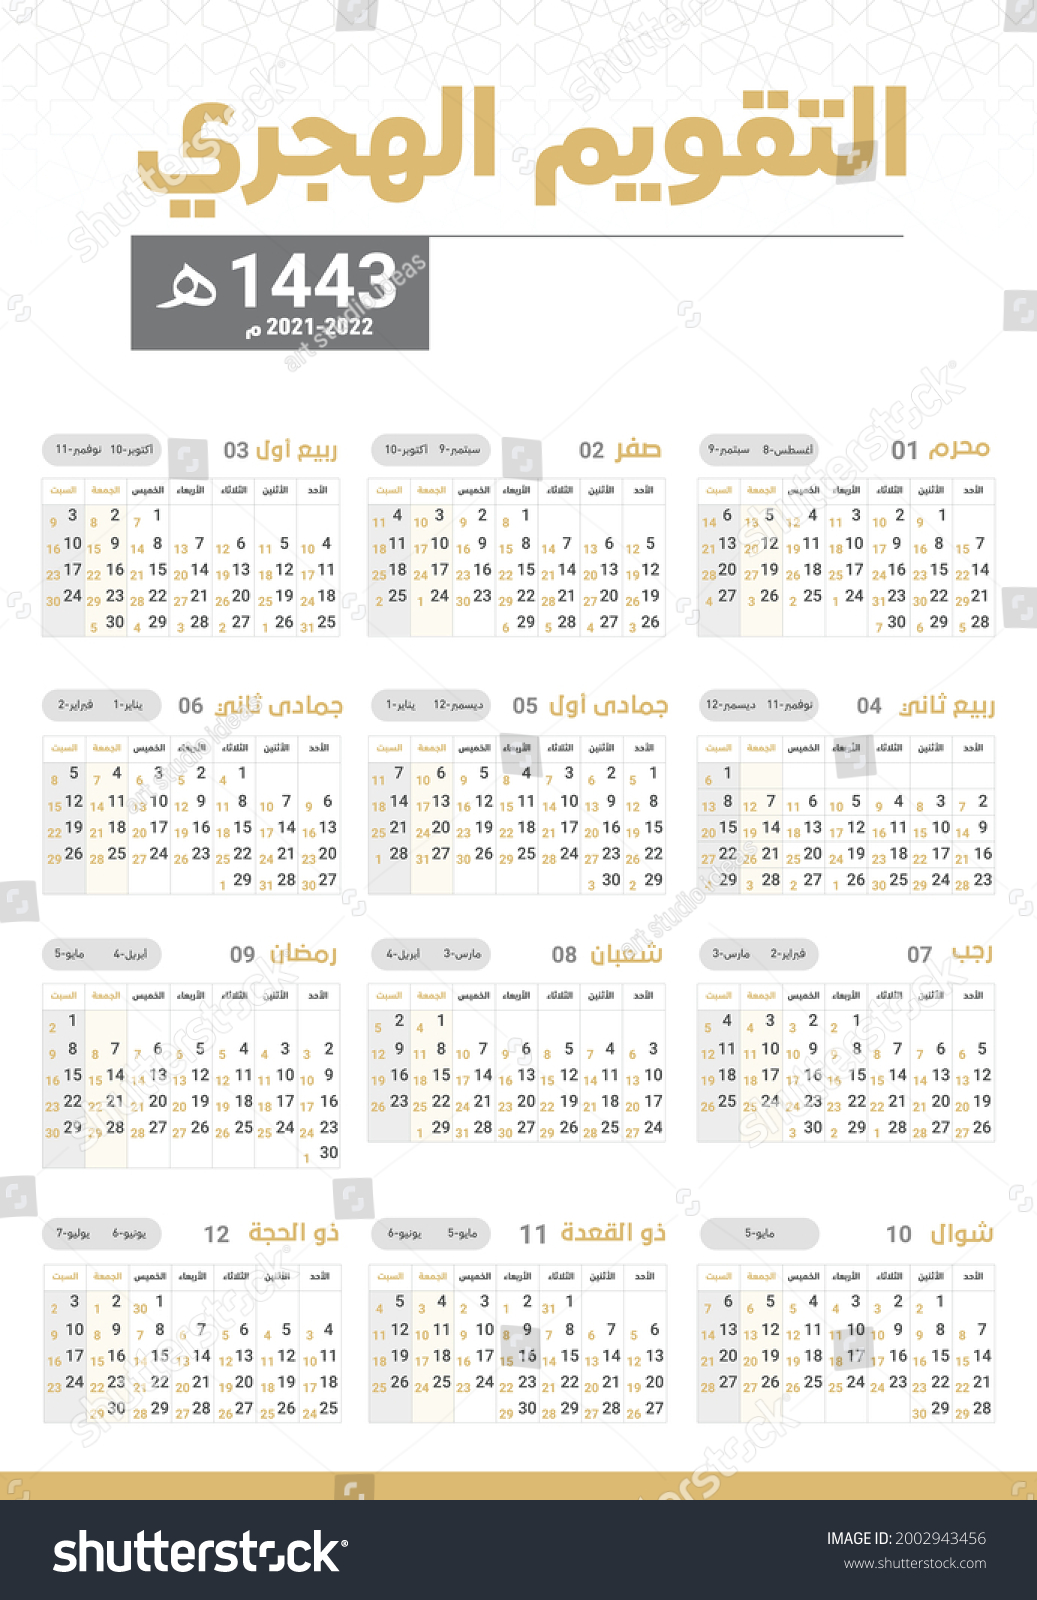 Calendar 1443 hijri